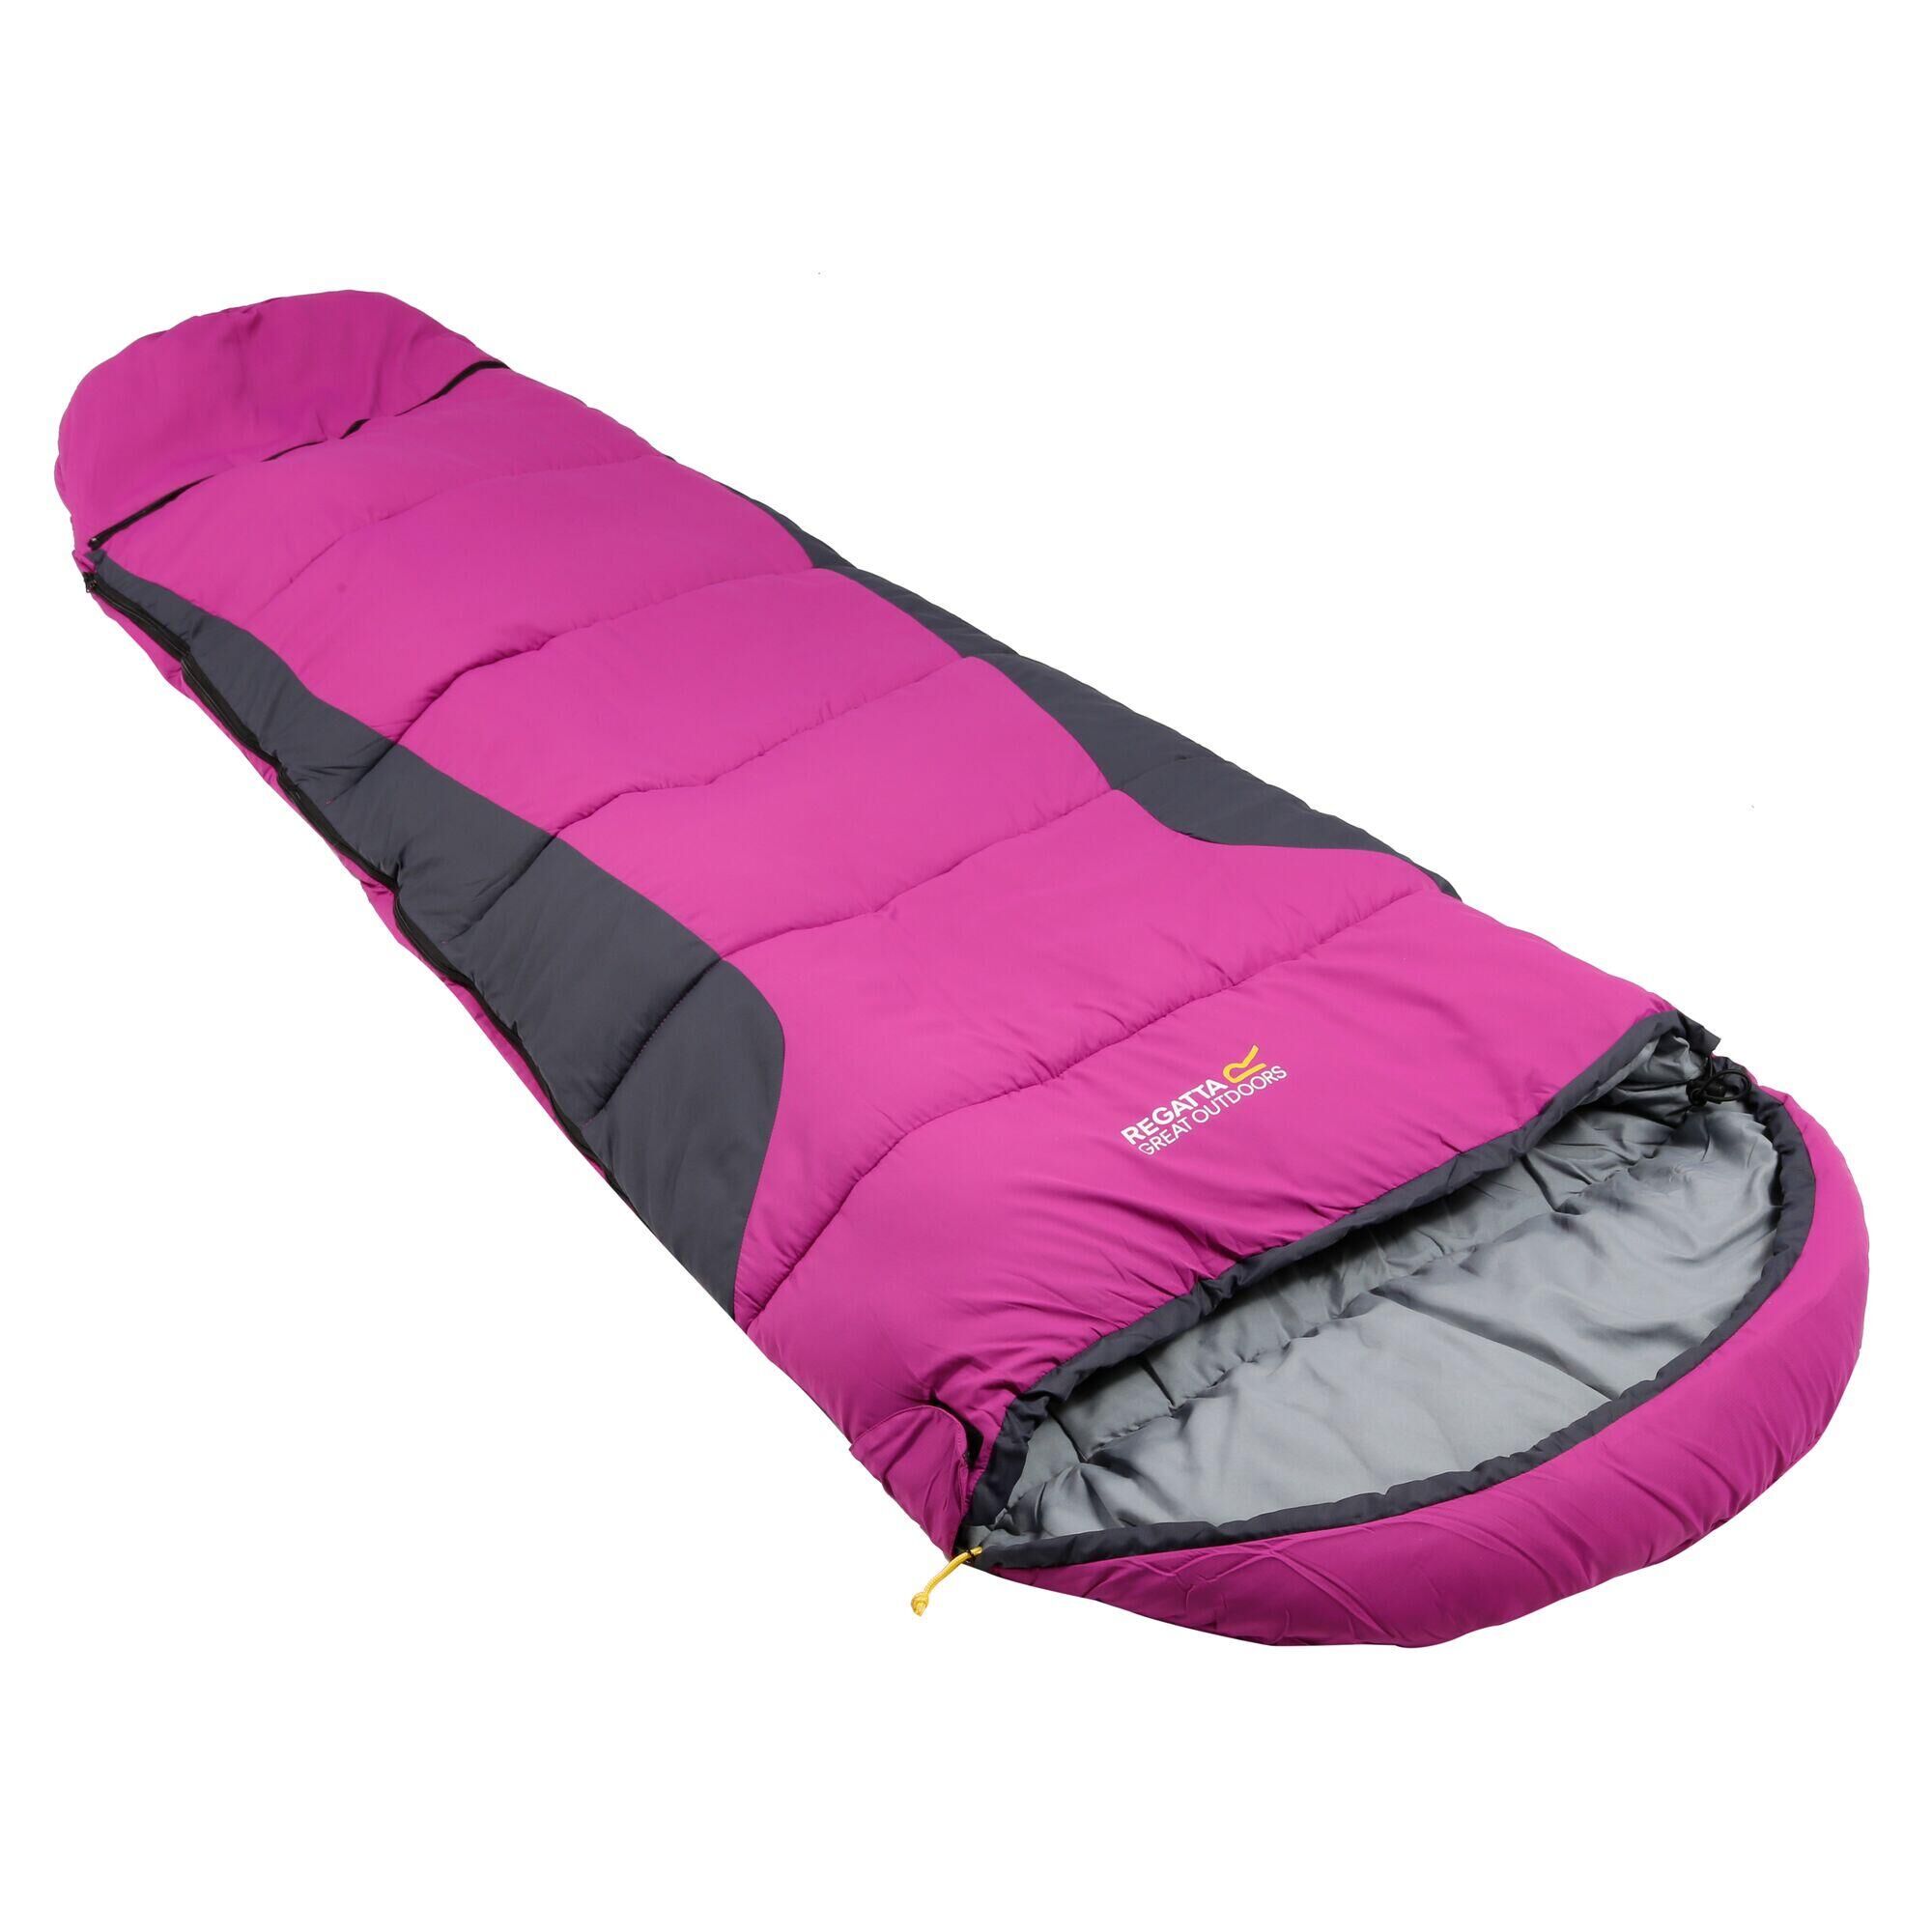 REGATTA Hilo Boost Adults' Camping Sleeping Bag - Azalia Pink/Ebony